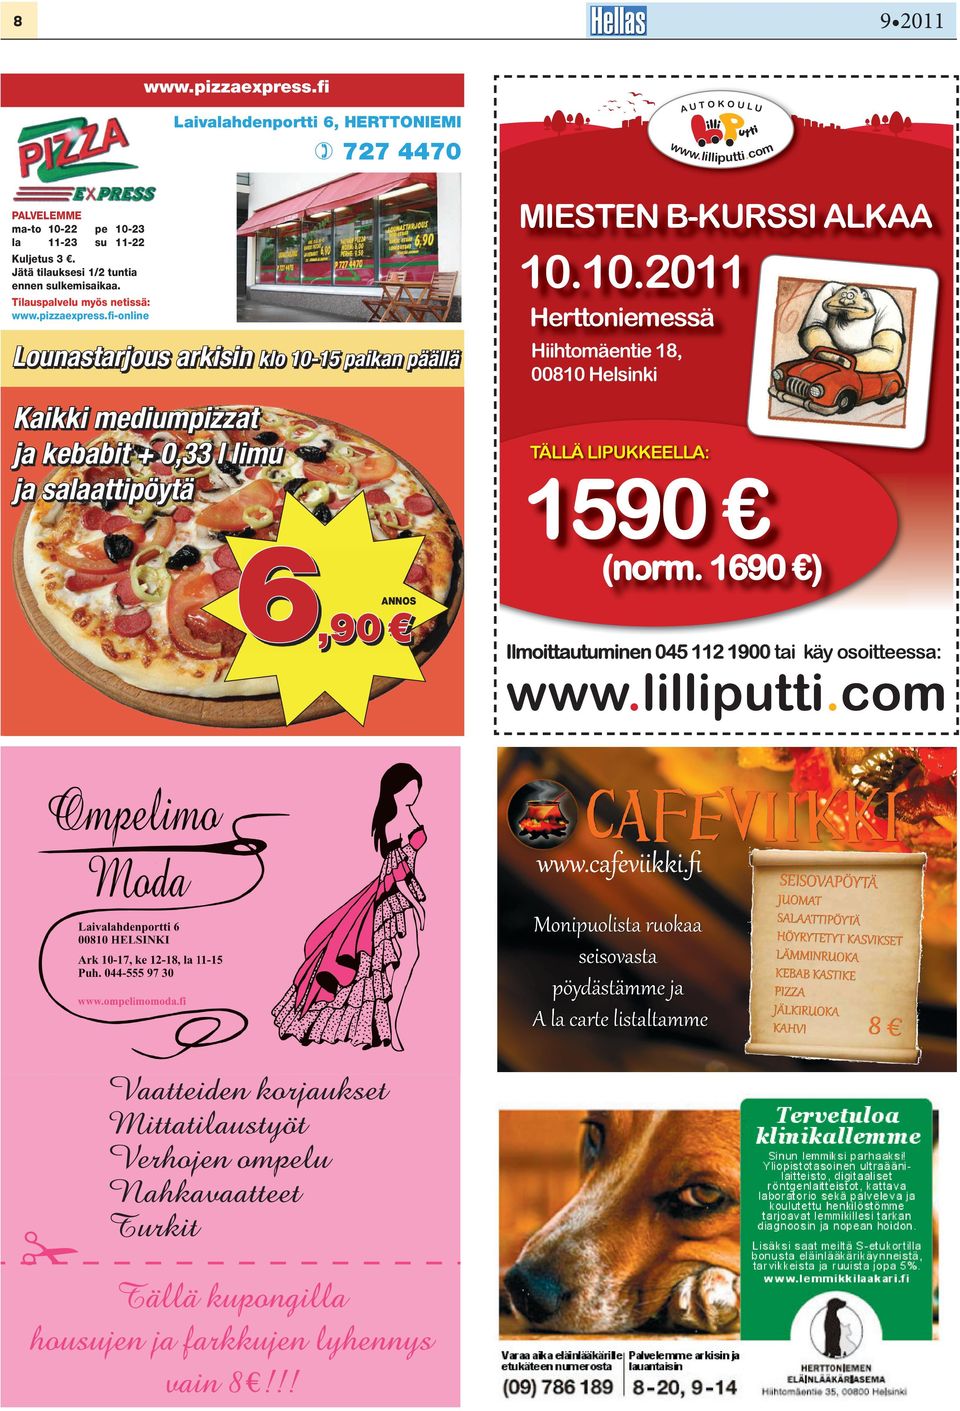 Tilauspalvelu myös netissä: www.pizzaexpress.